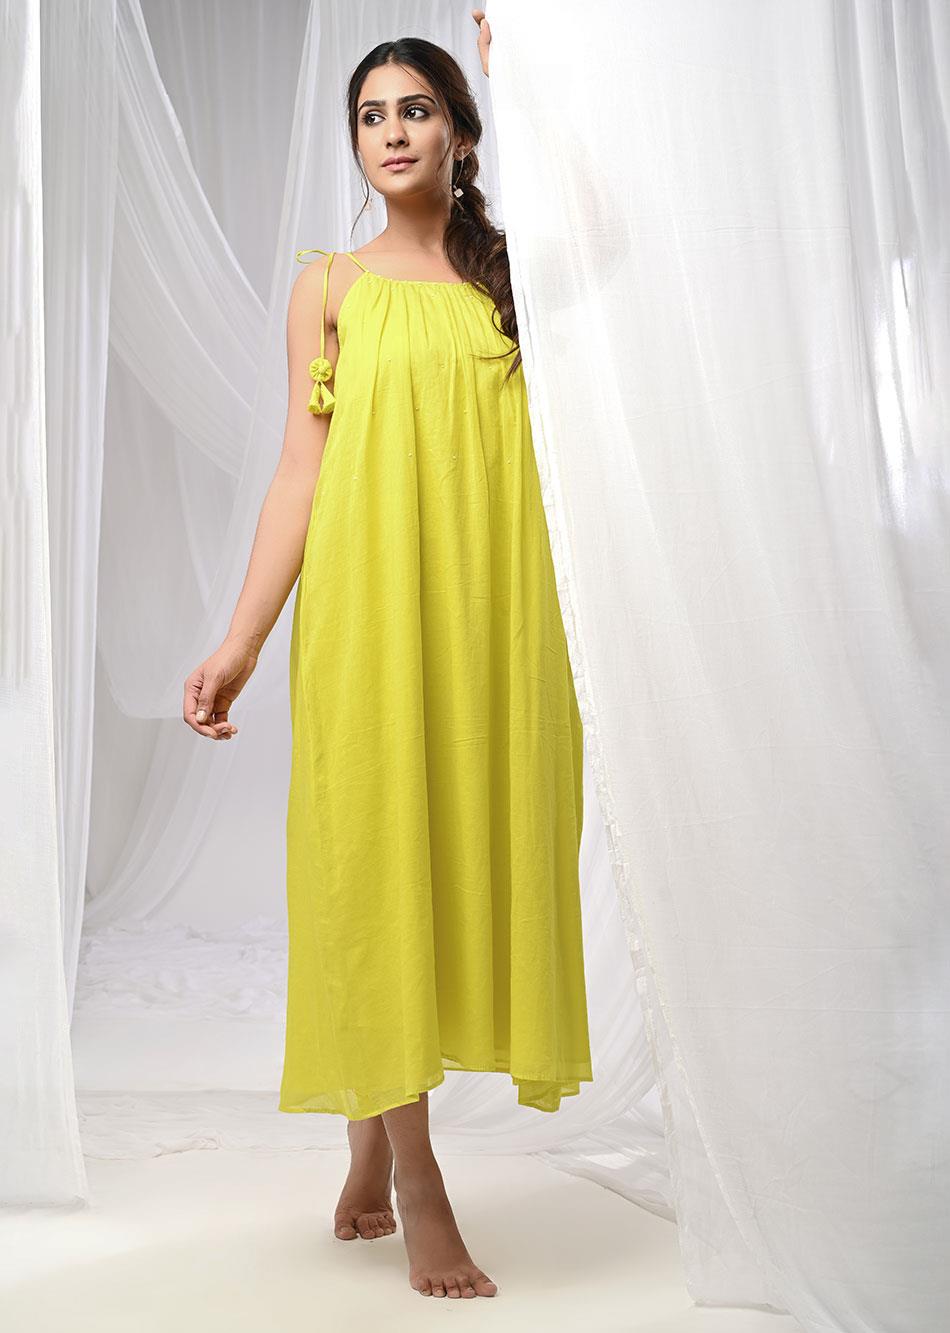 Summer Halter Dress (Electric Yellow)